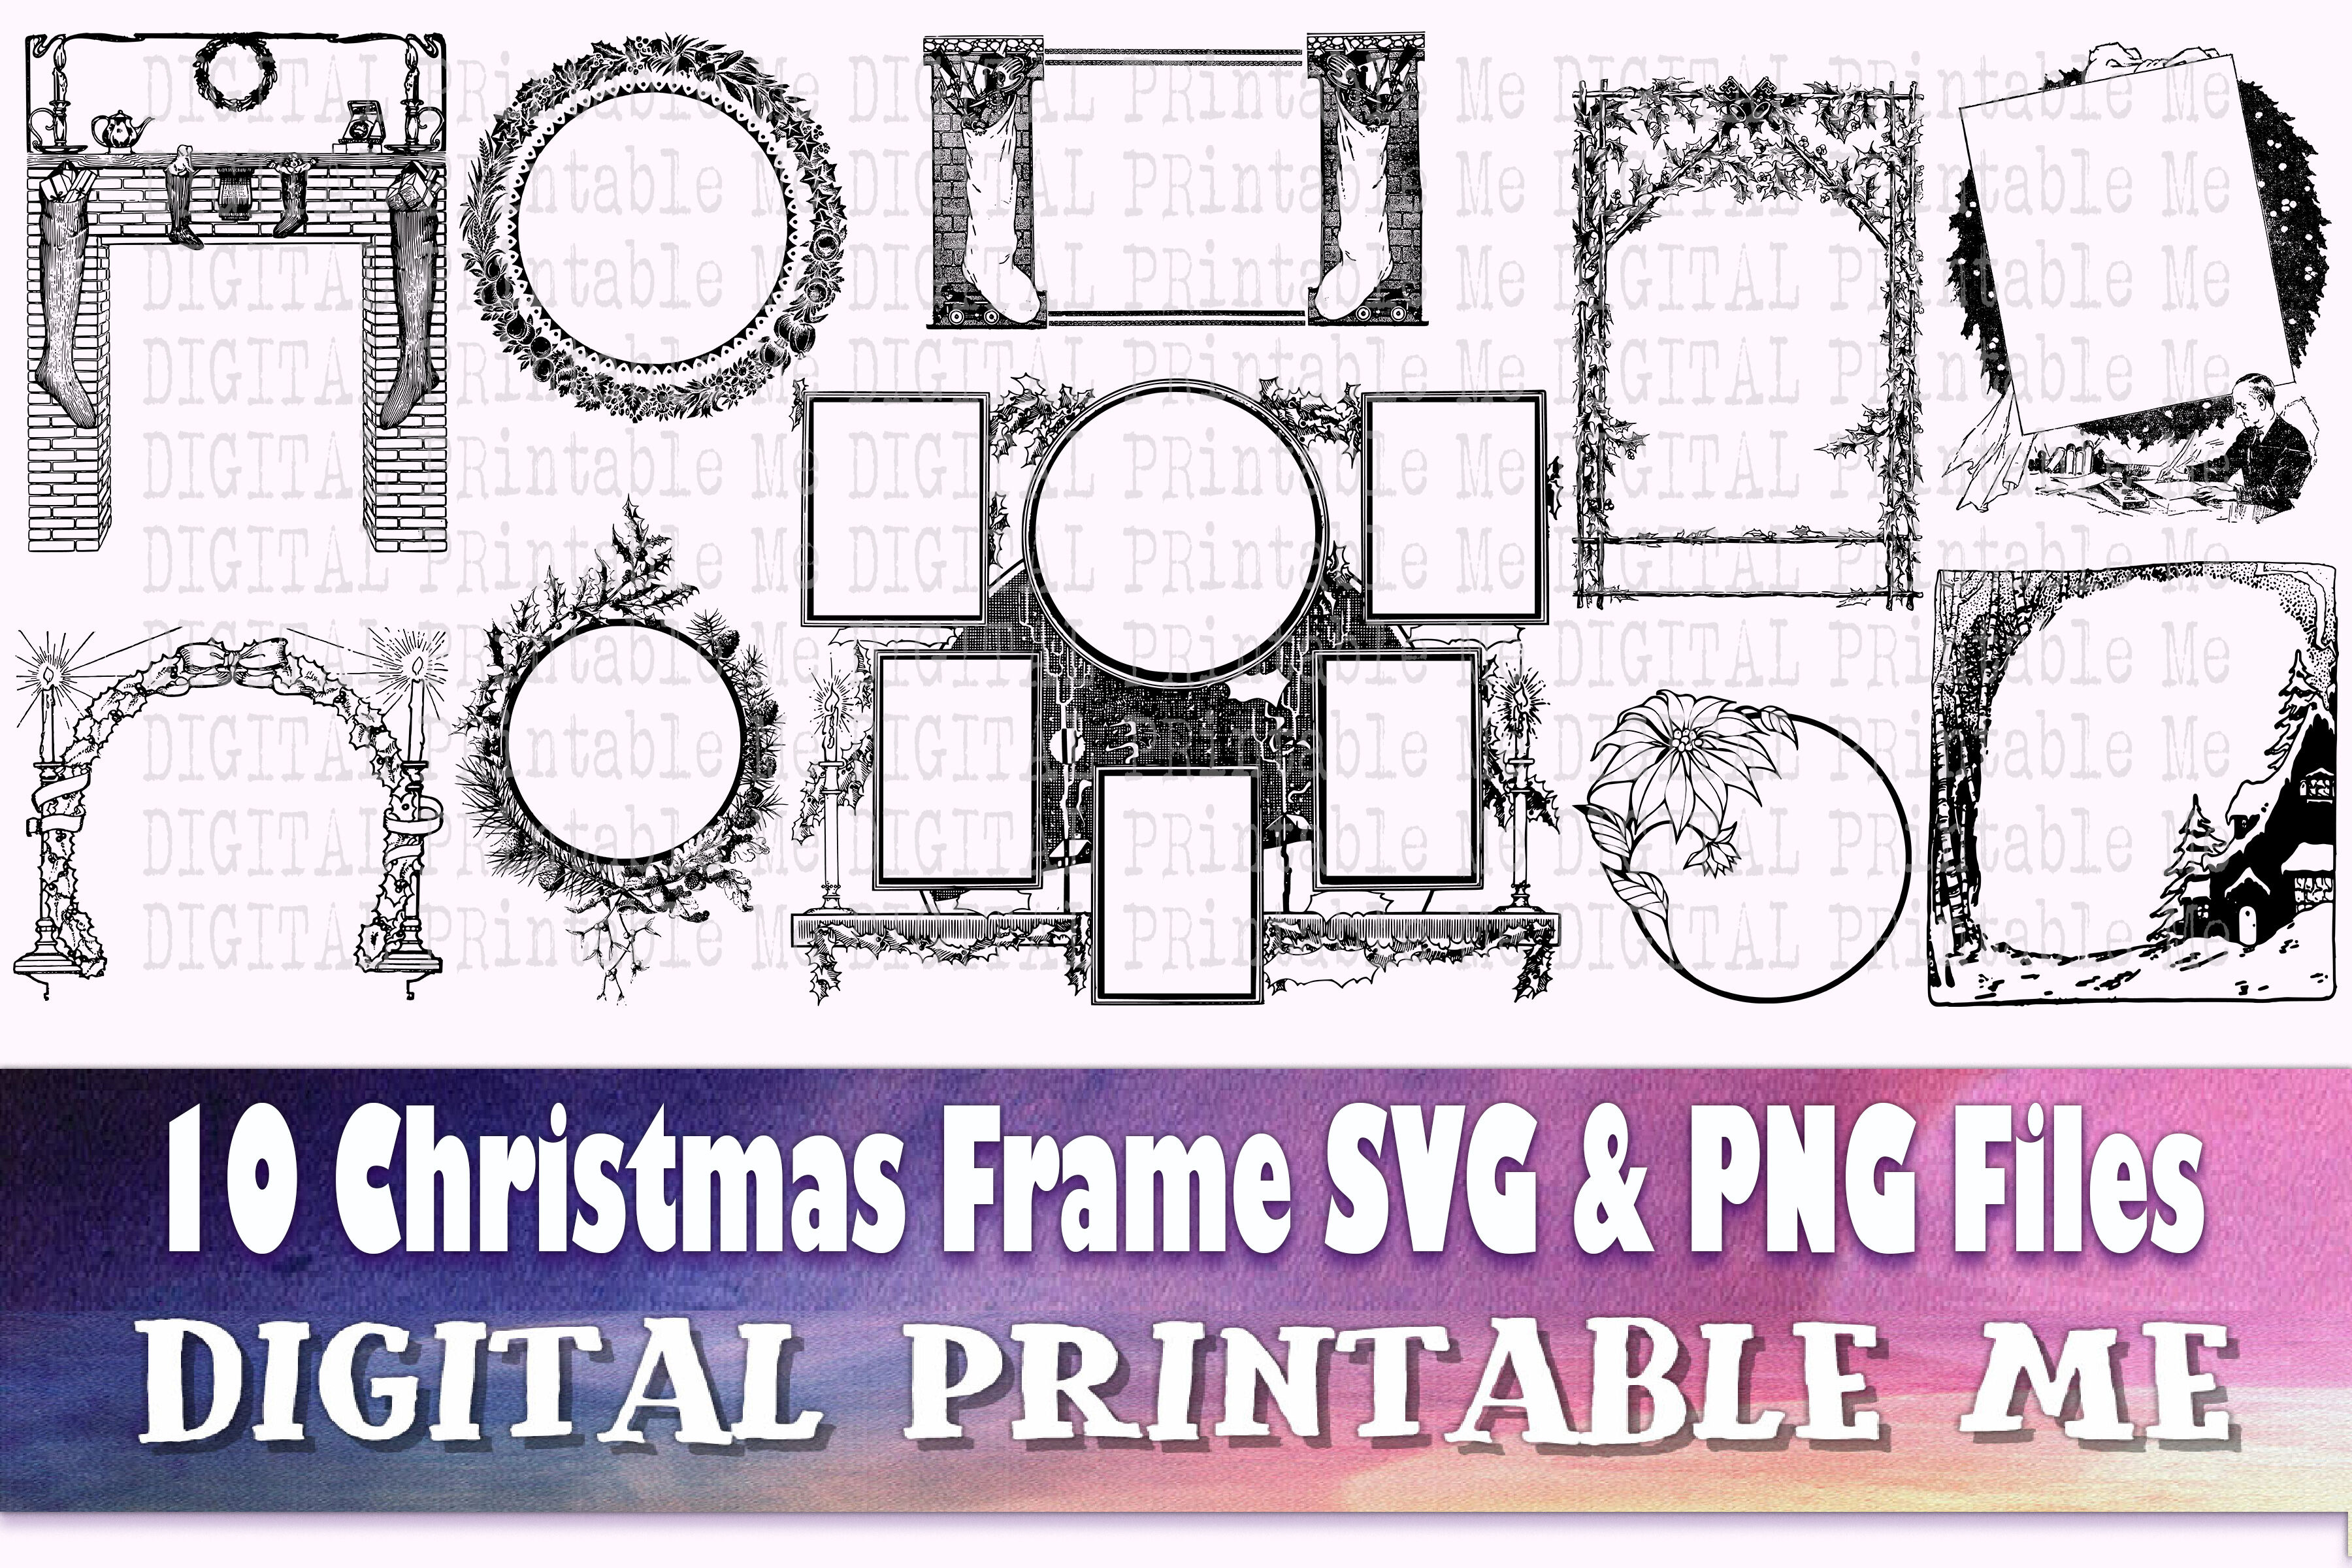 Download Christmas Frames Svg Bundle Holiday Png Clip Art Pack 10 Images By Digitalprintableme Thehungryjpeg Com